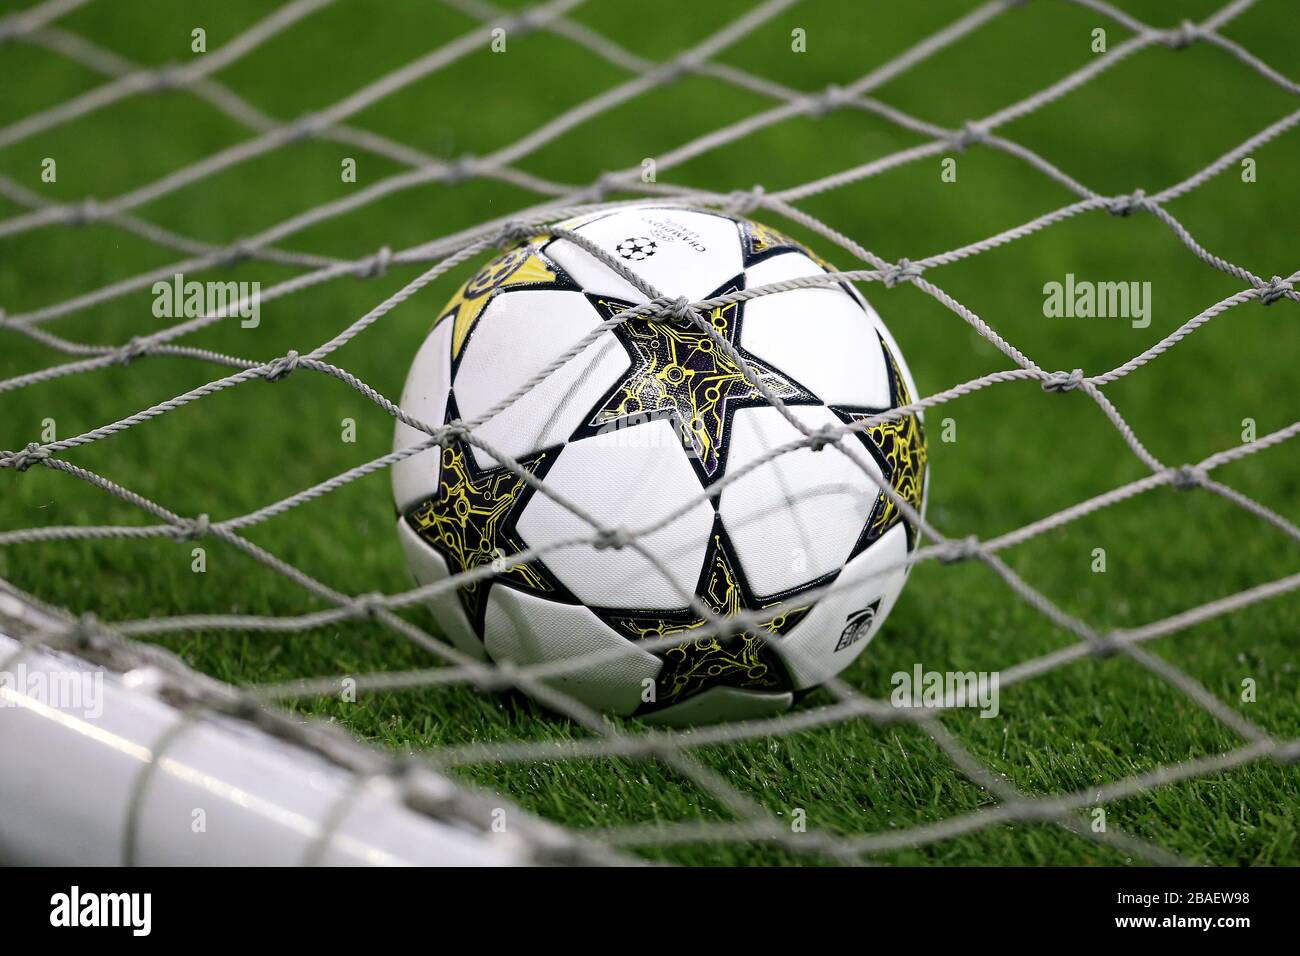 UEFA Champions League match day ball Stock Photo